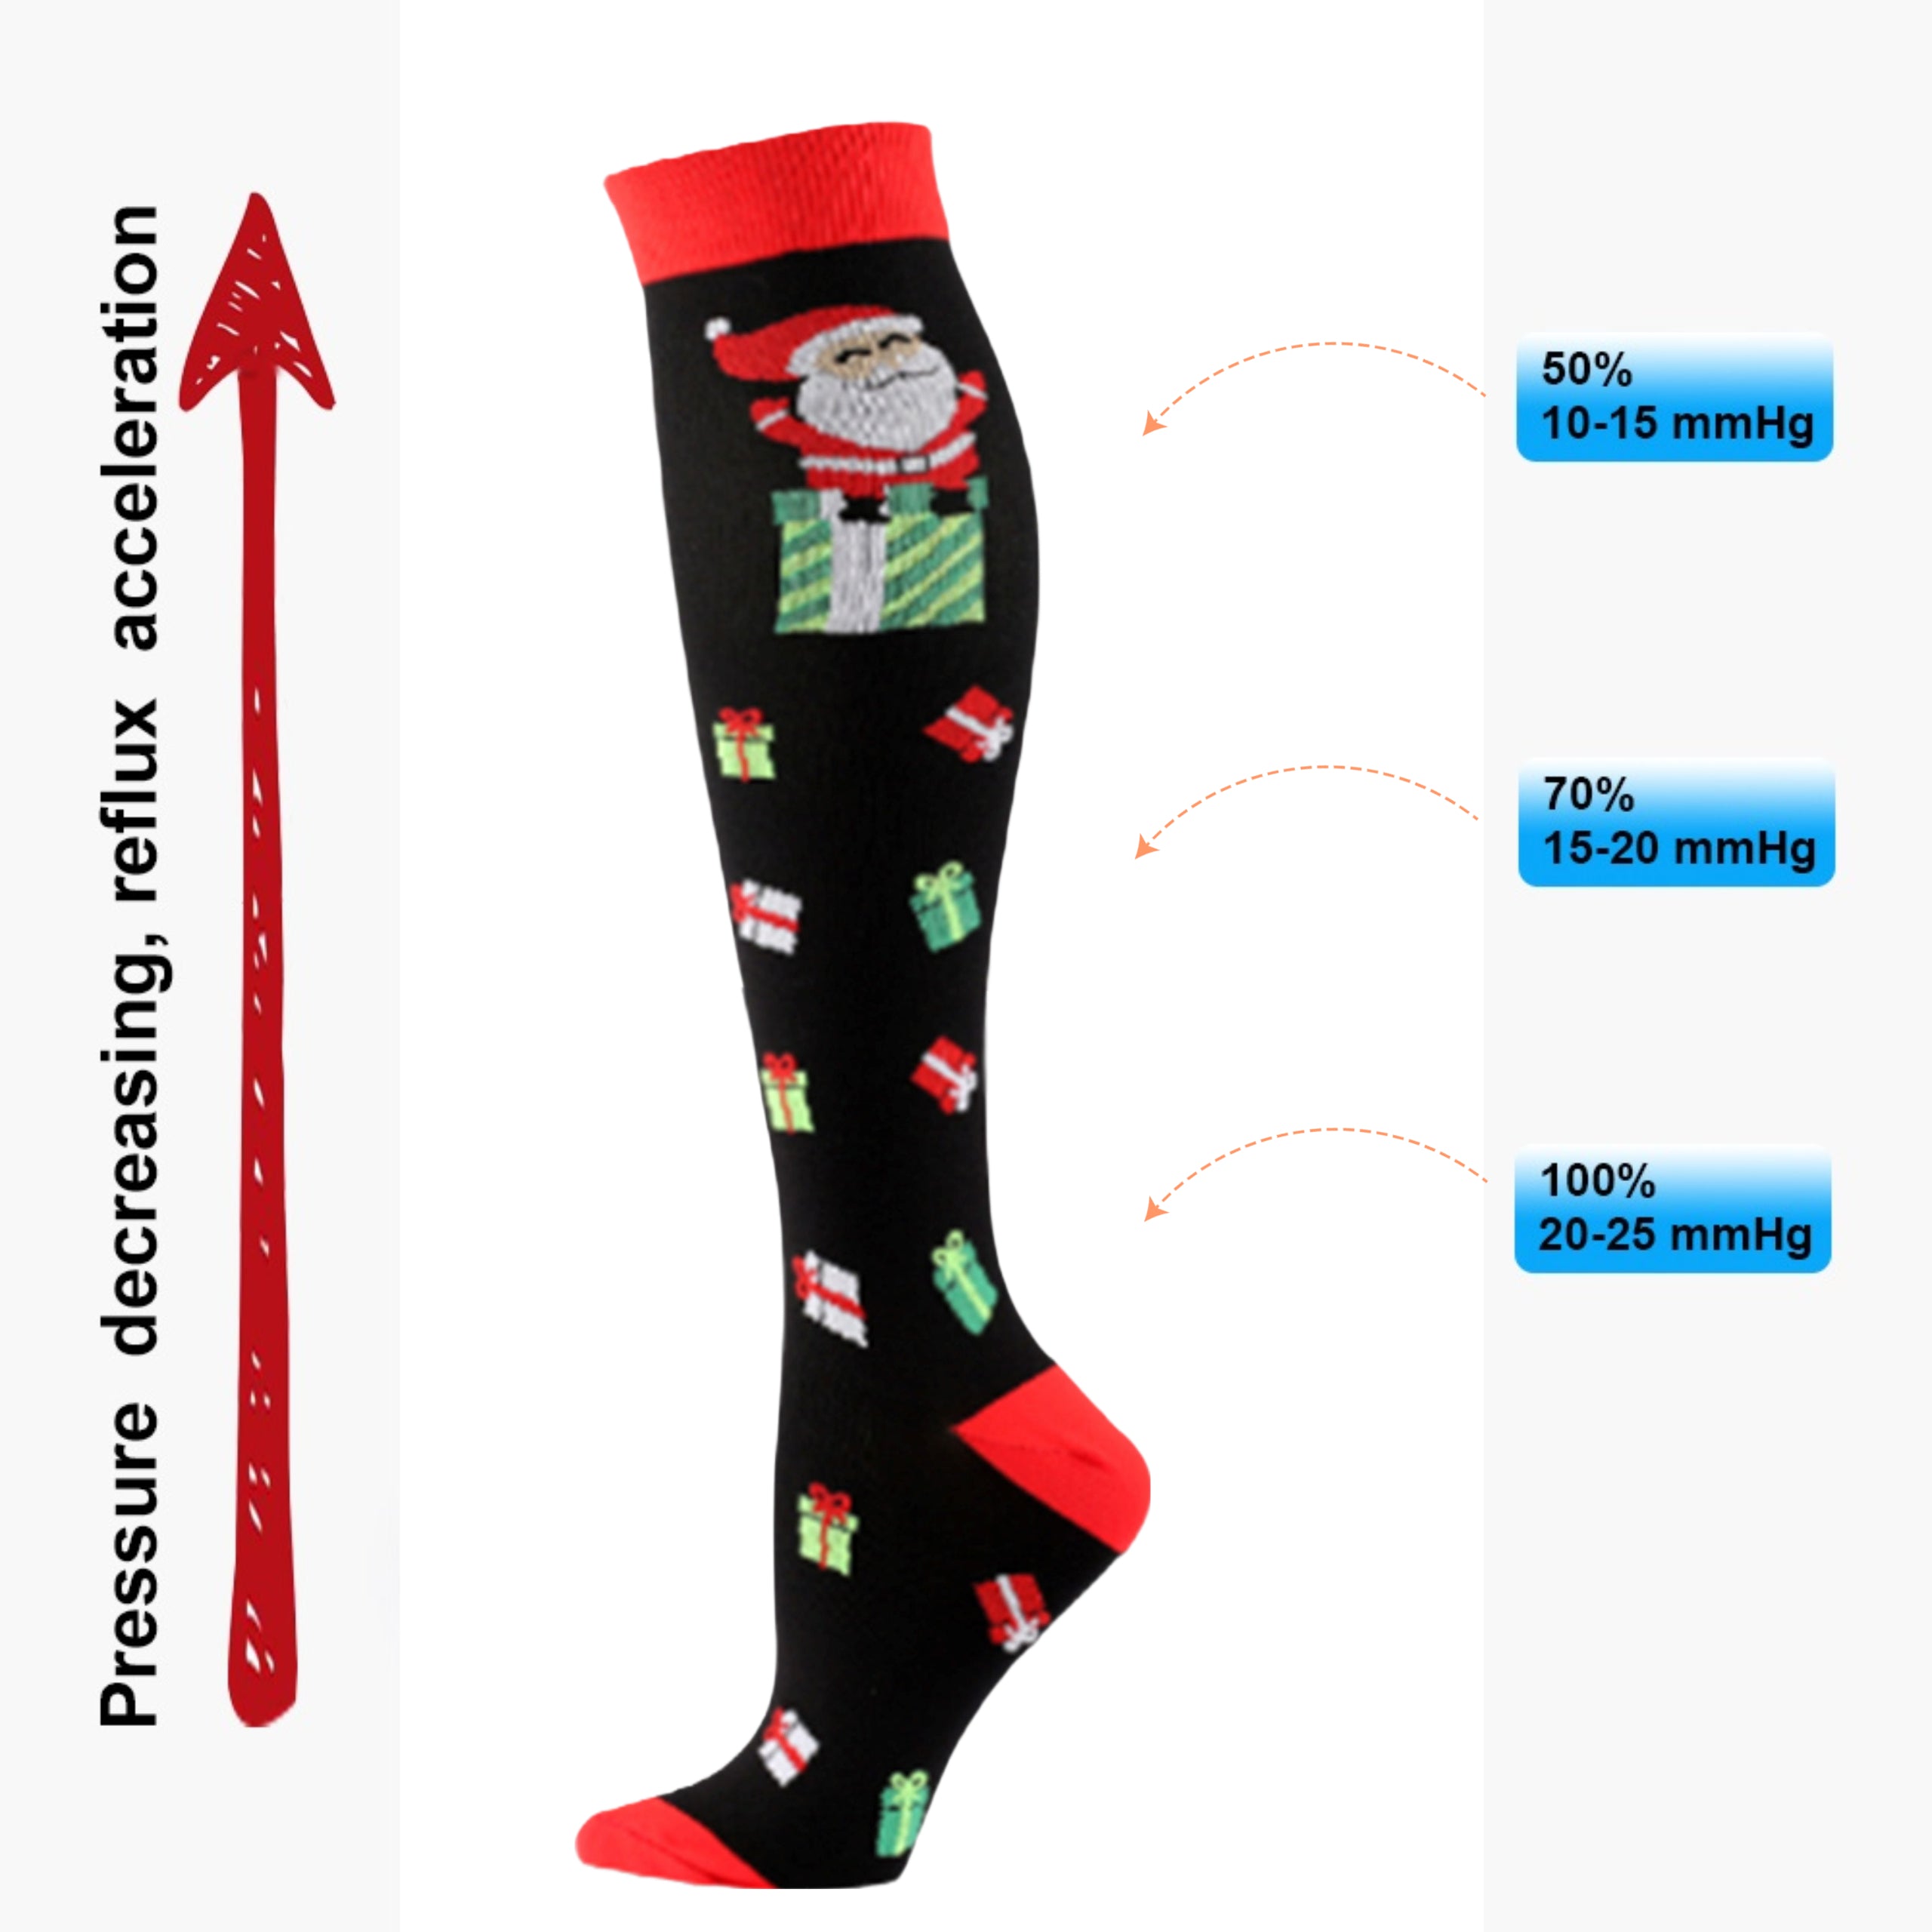 The Santa Gift Knee High (Compression Socks)